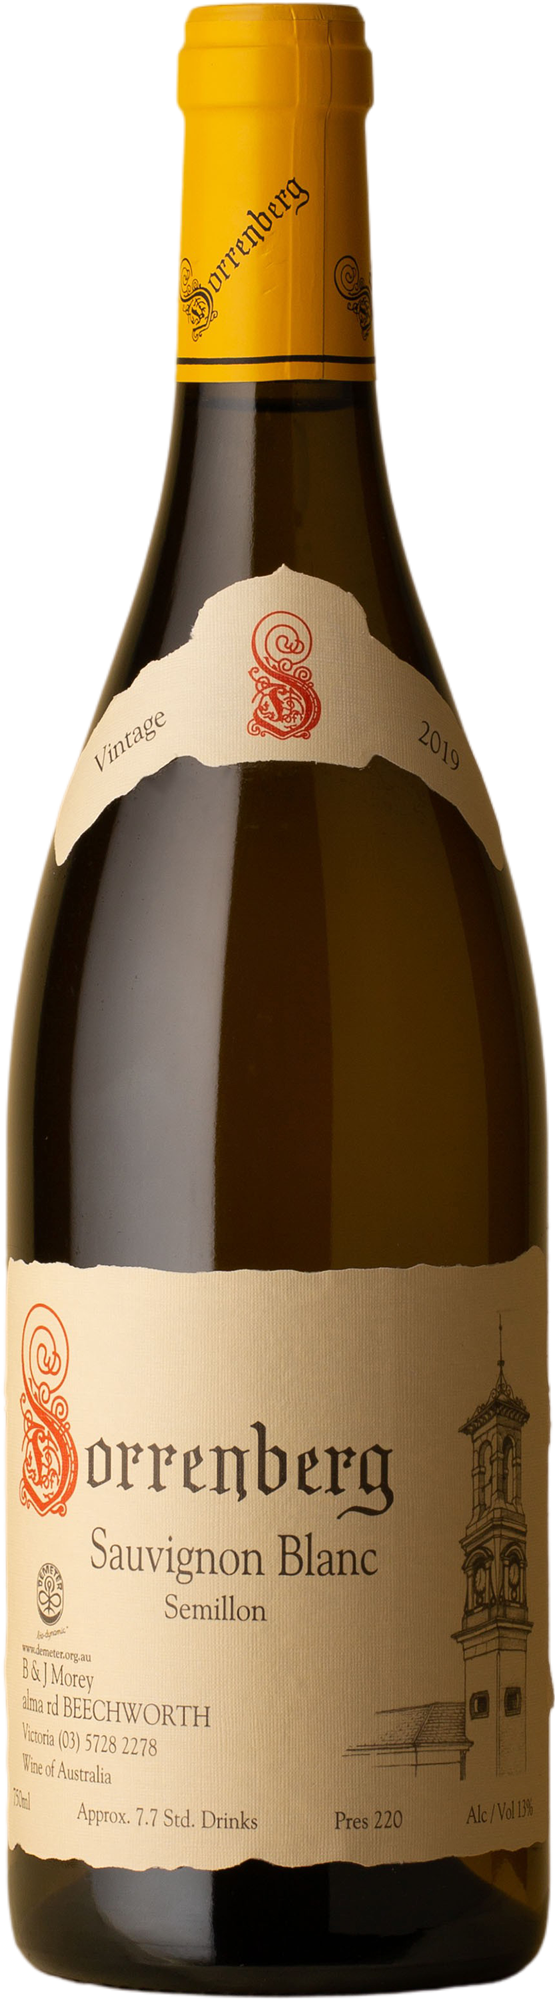 Sorrenberg - Sauvignon Blanc / Semillon 2019 White Wine